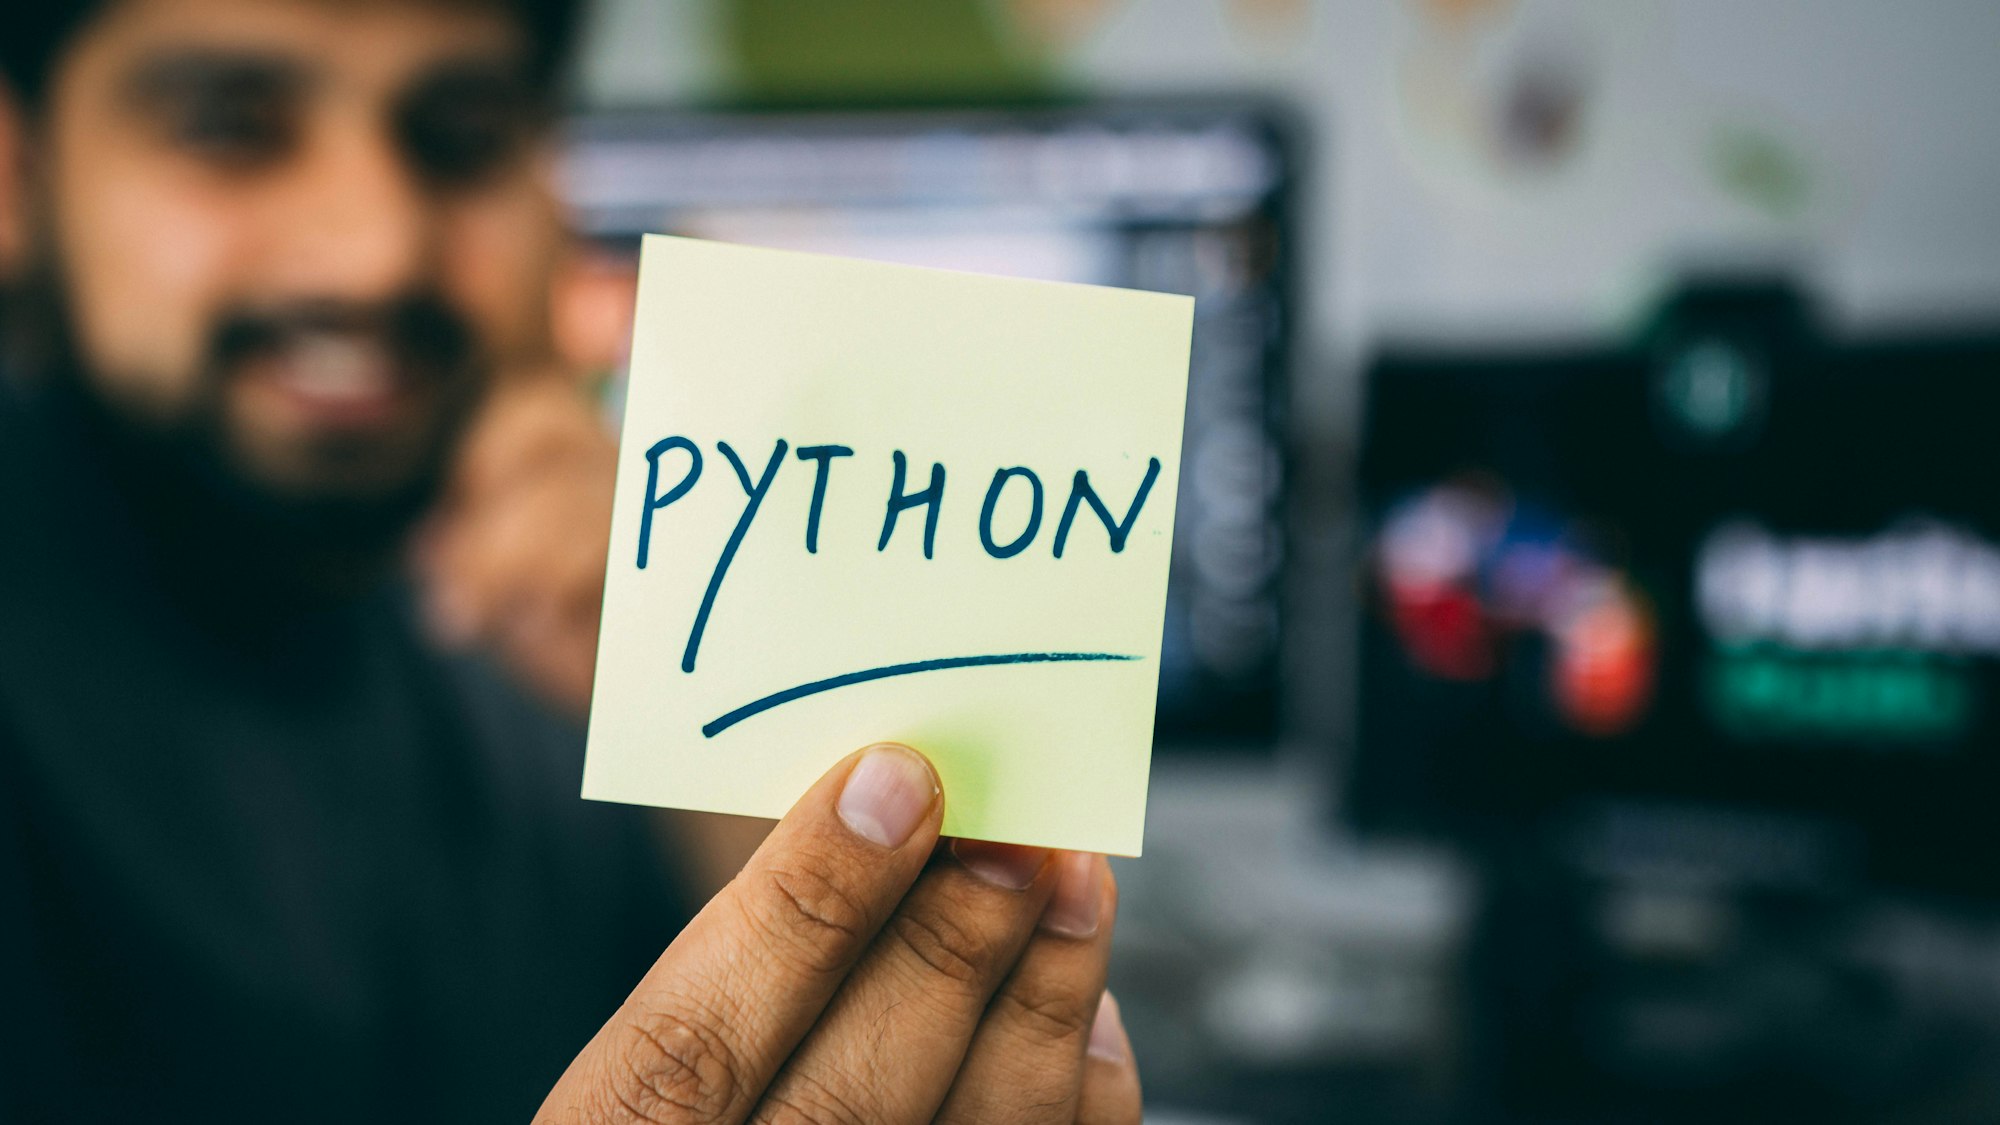 Top 5 books to improve your Python skills